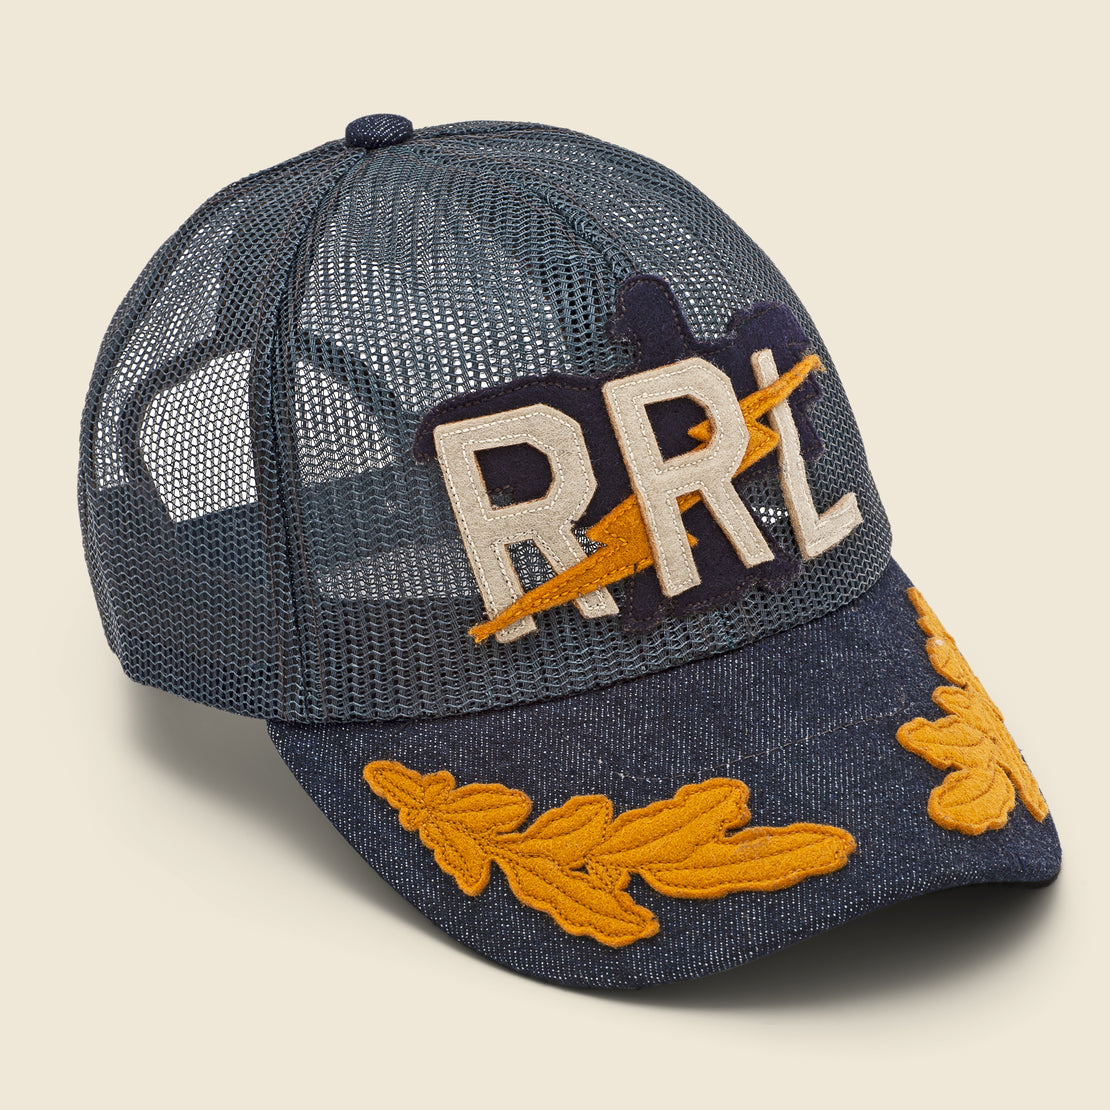 RRL Mesh Trucker Hat - Navy/Indigo/Gold